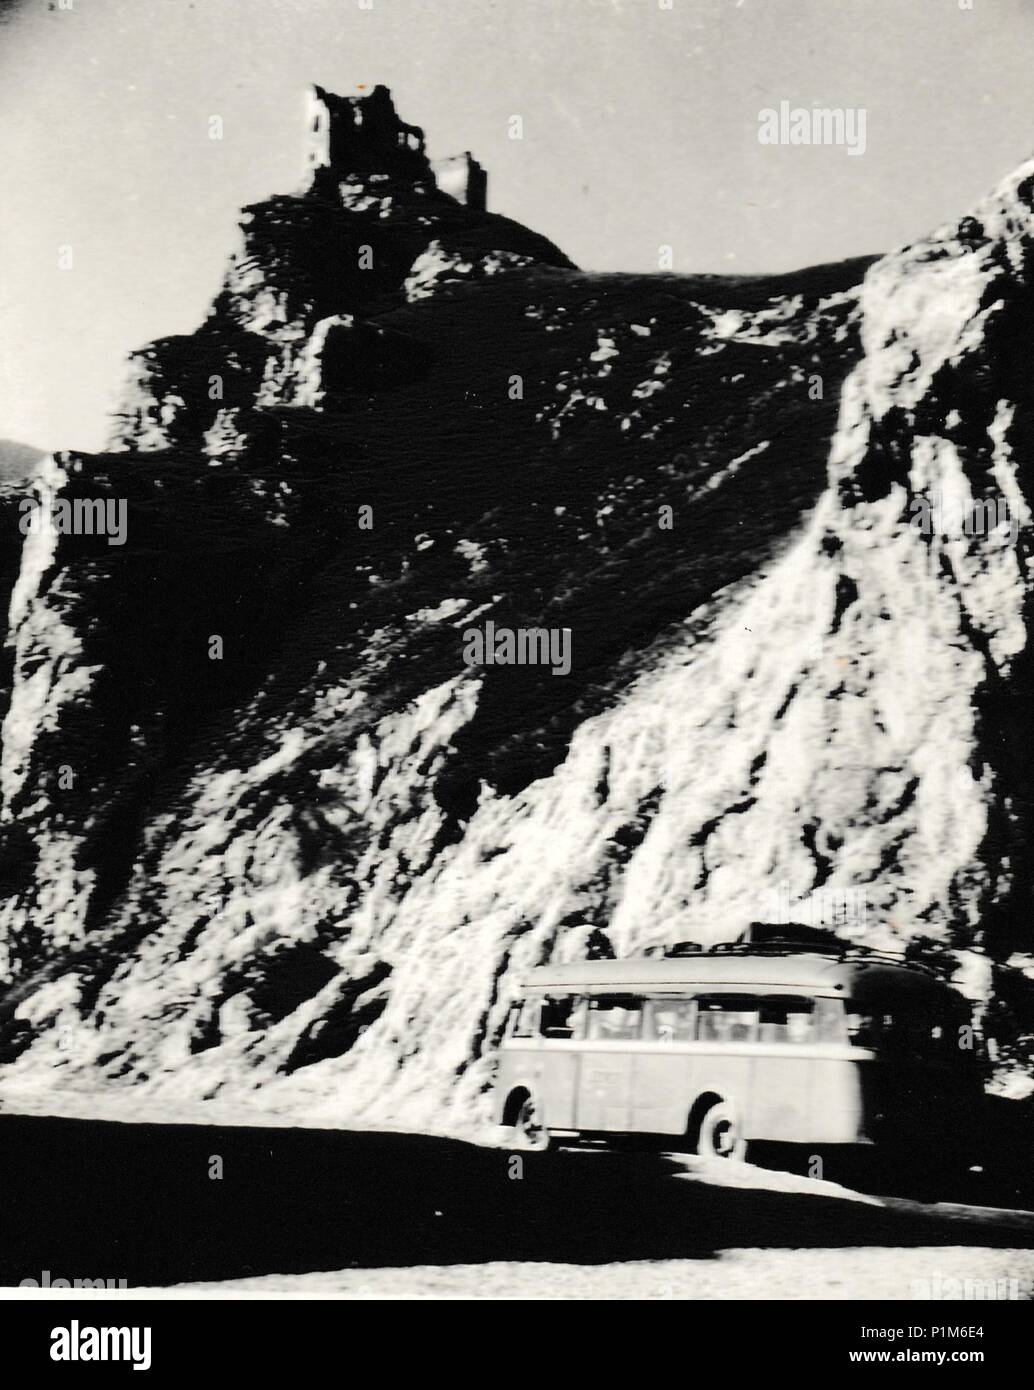 THE CZECHOSLOVAK SOCIALIST REPUBLIC - CIRCA 1950s: Retro photo shows a bus. The castle is on background. Vintage black & white photography. Stock Photo